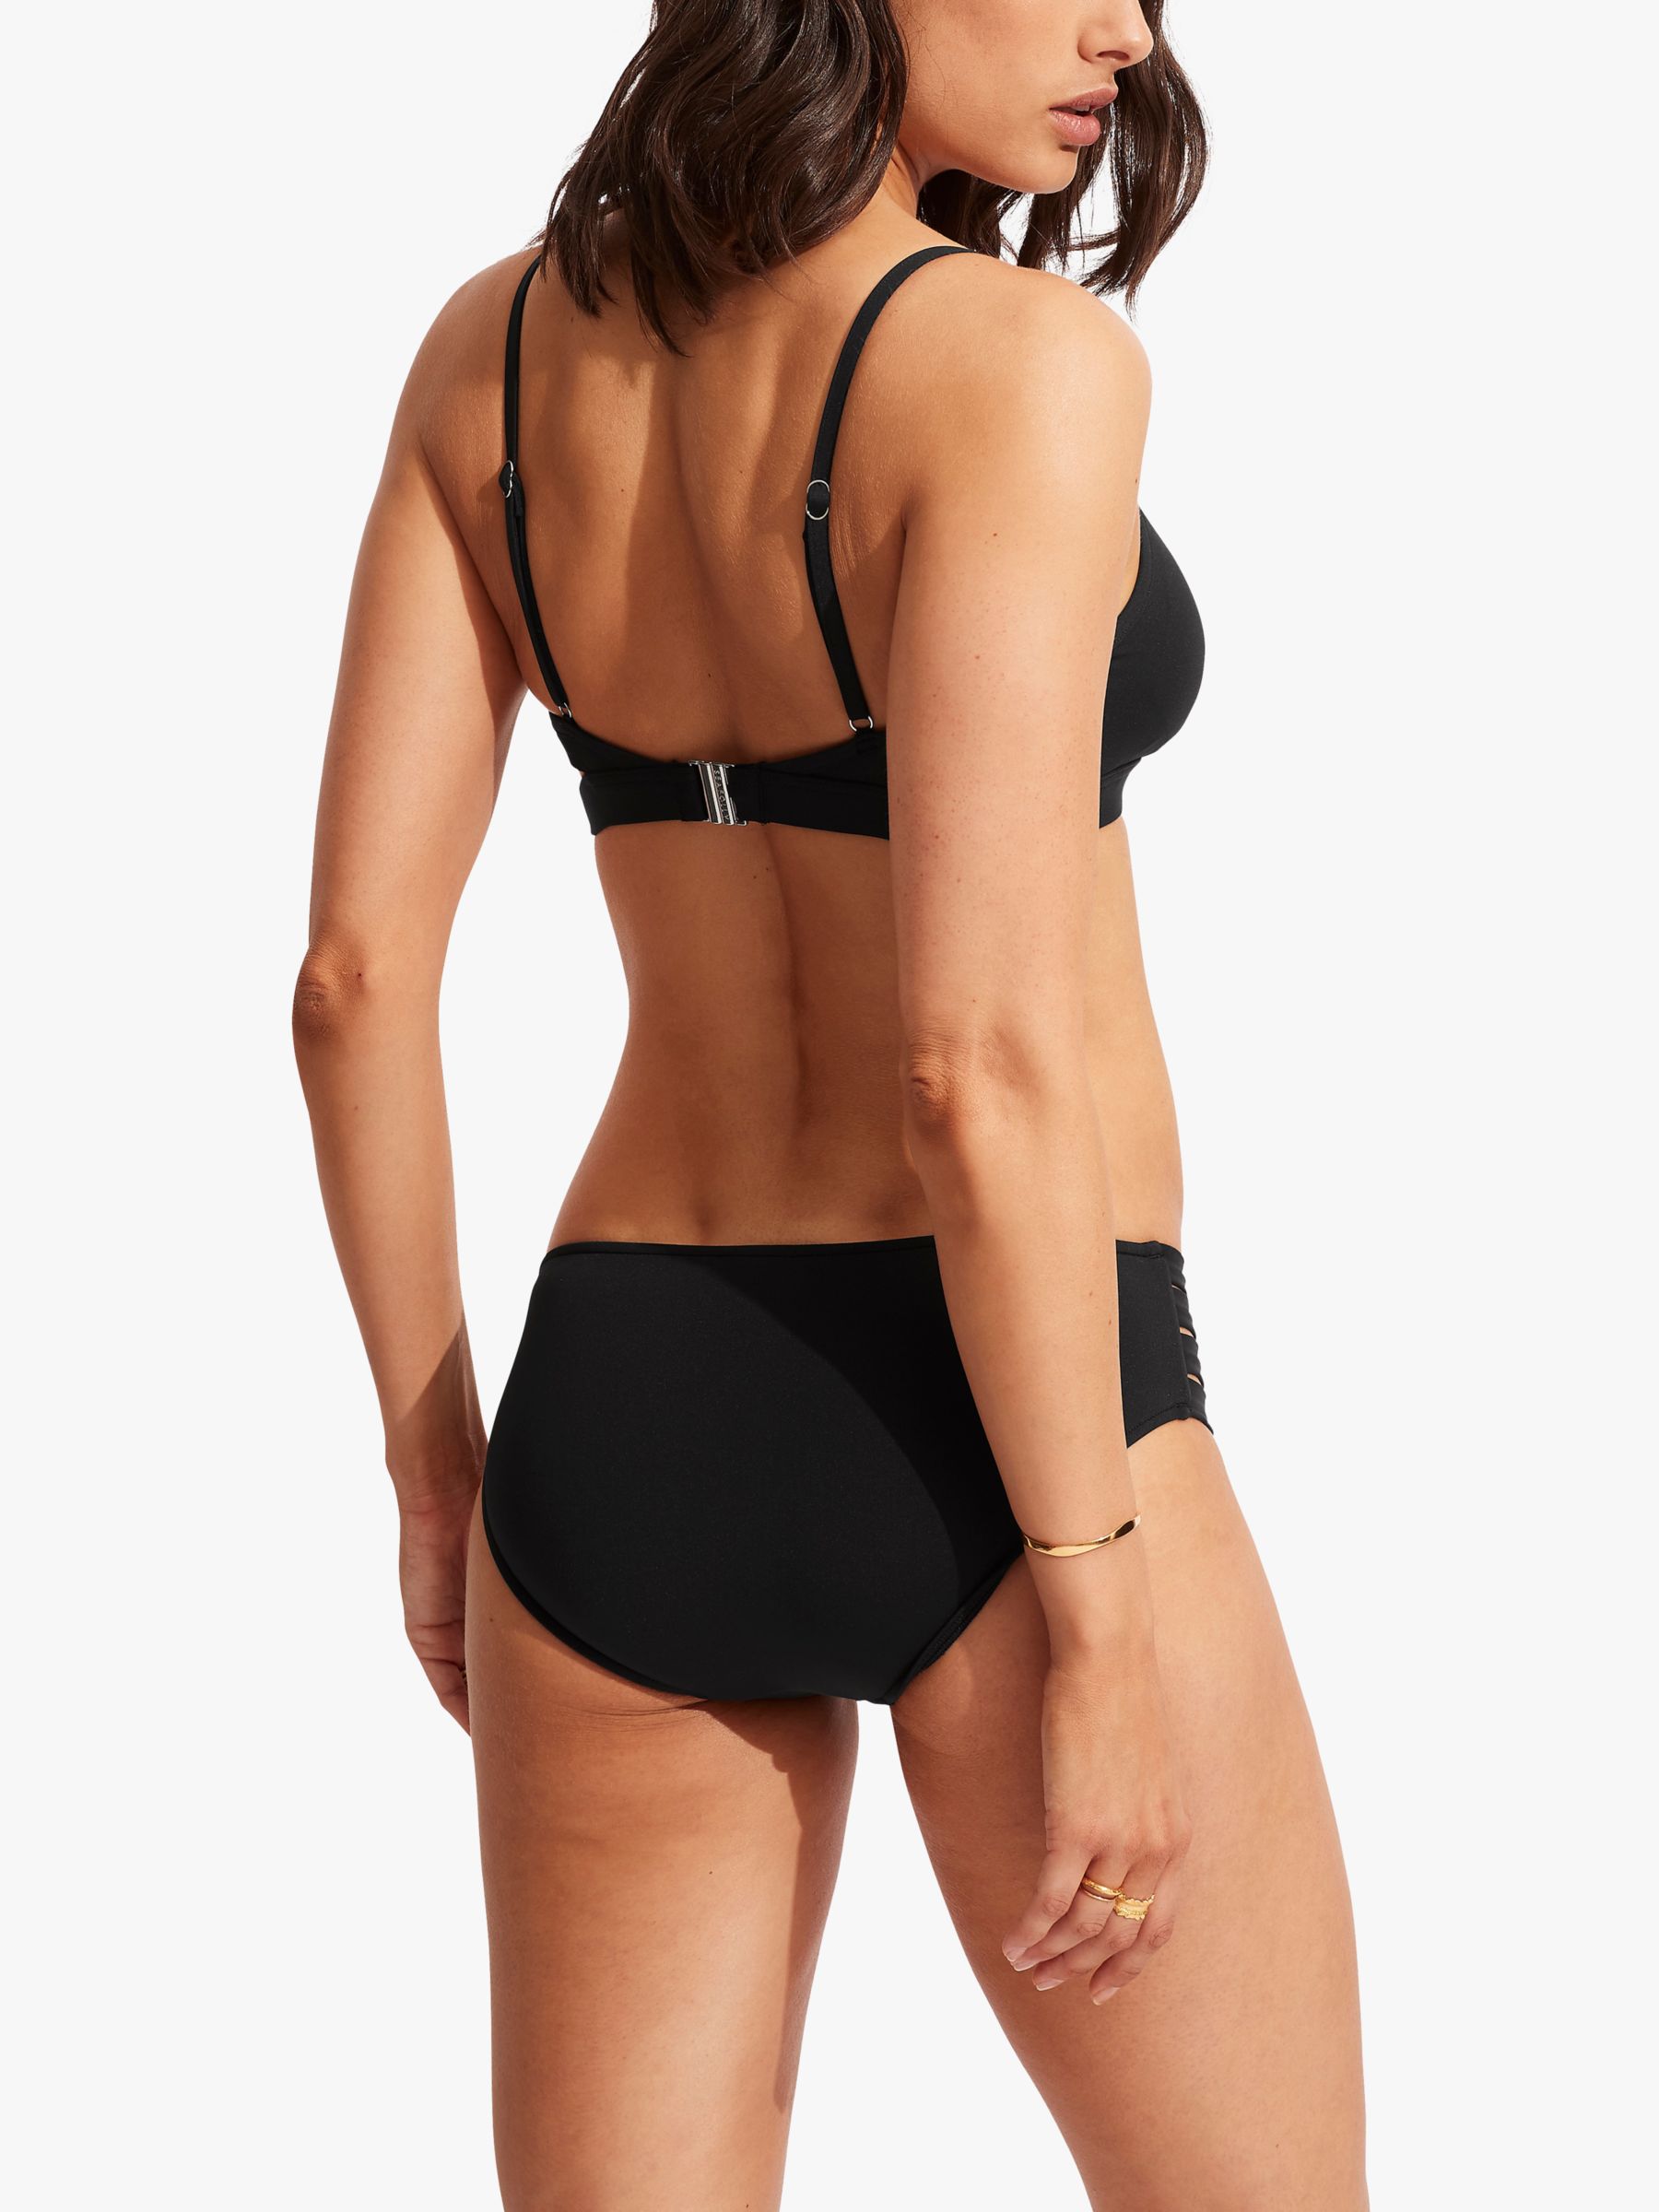 Seafolly Collective Hybrid Bralette Bikini Top, Black, 8